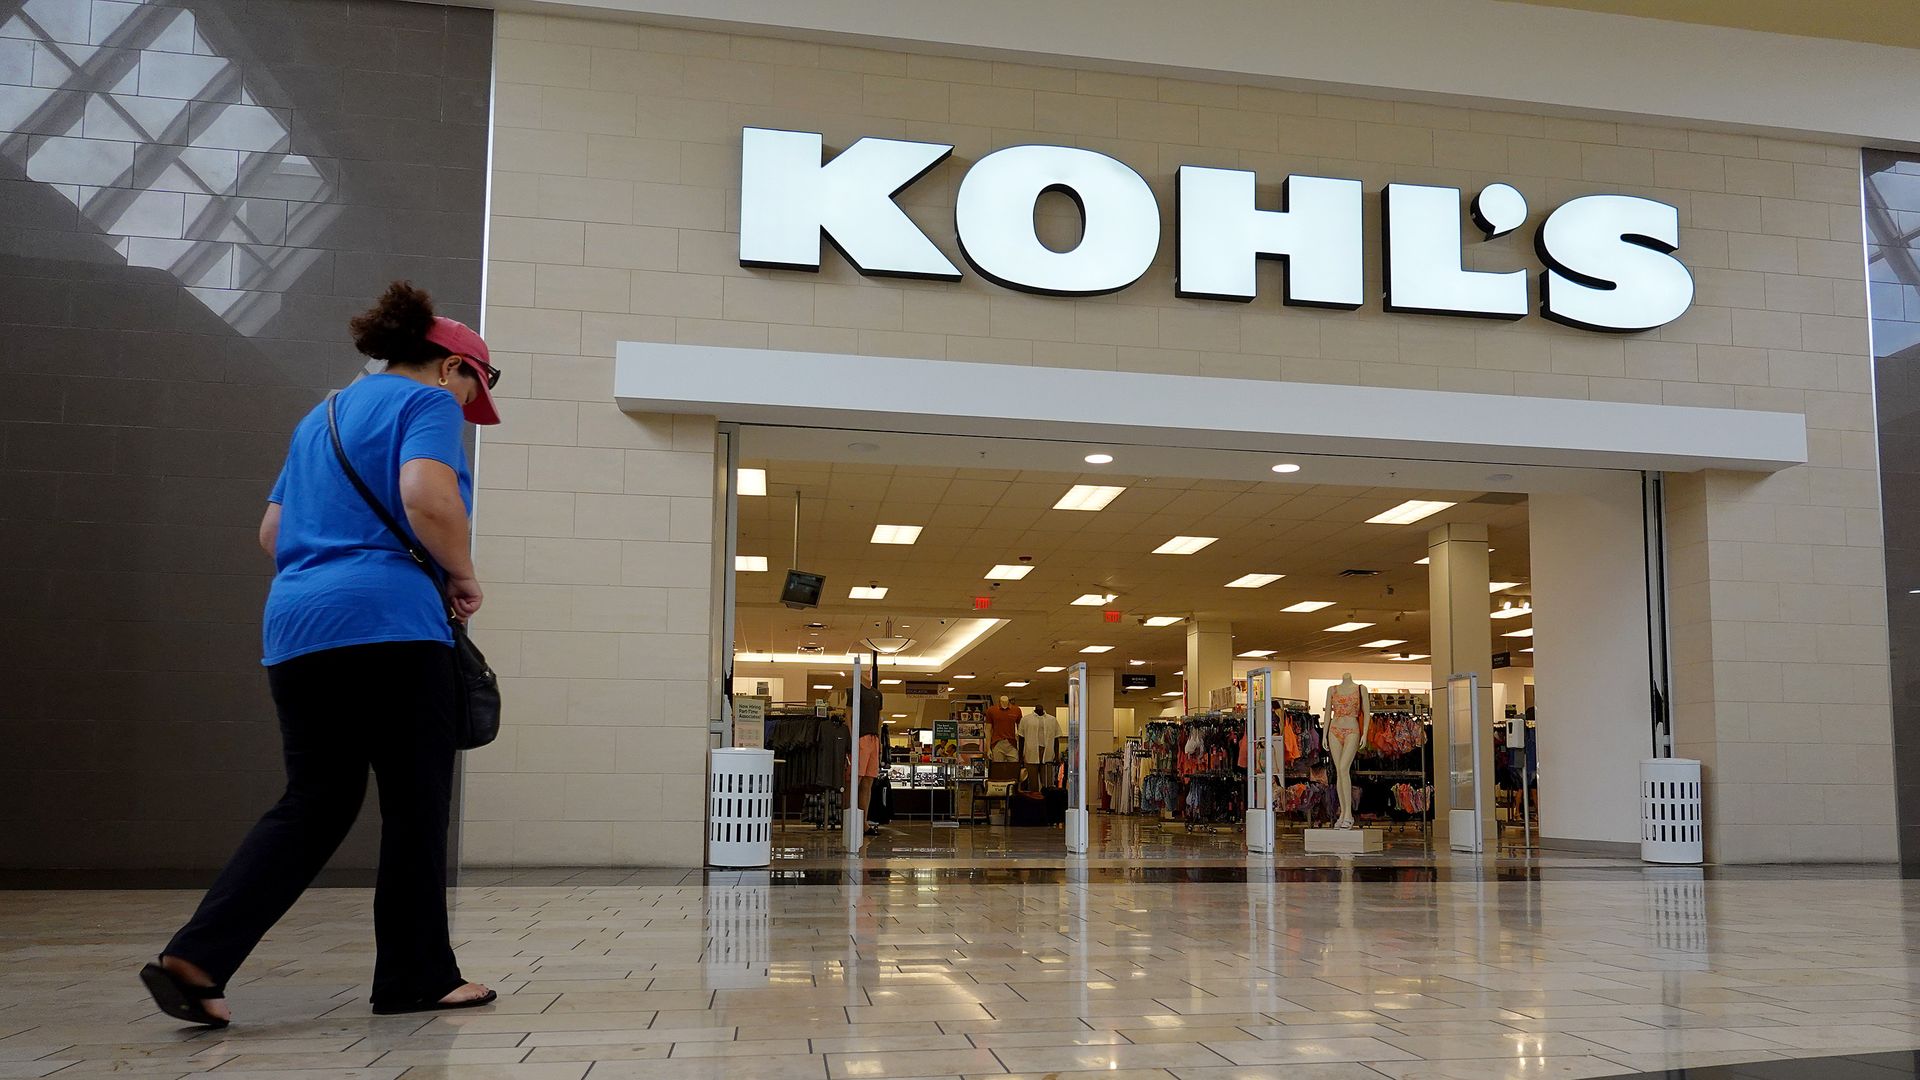 Kohl's storefront inside a mall